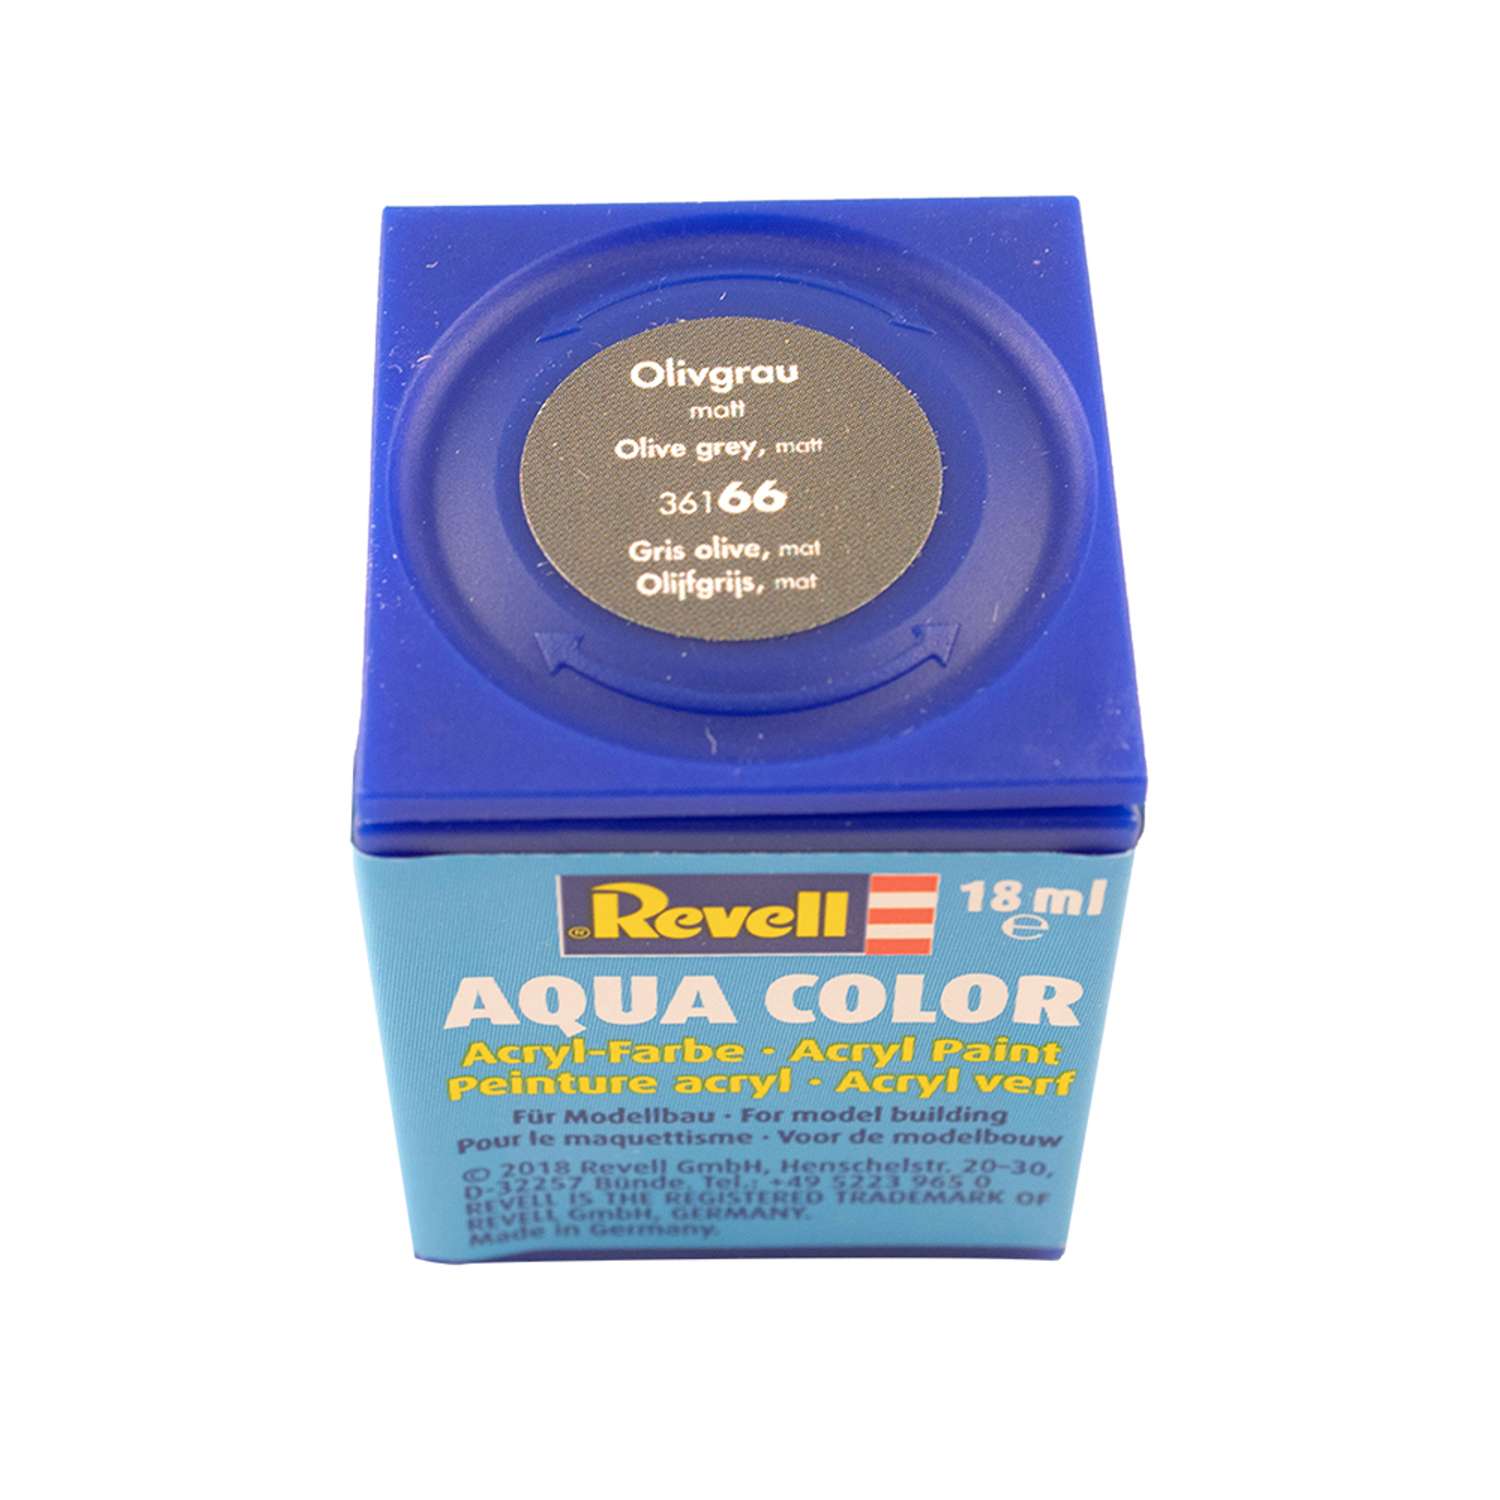 Краска Revell серо-оливковая матовая 36166 - фото 1